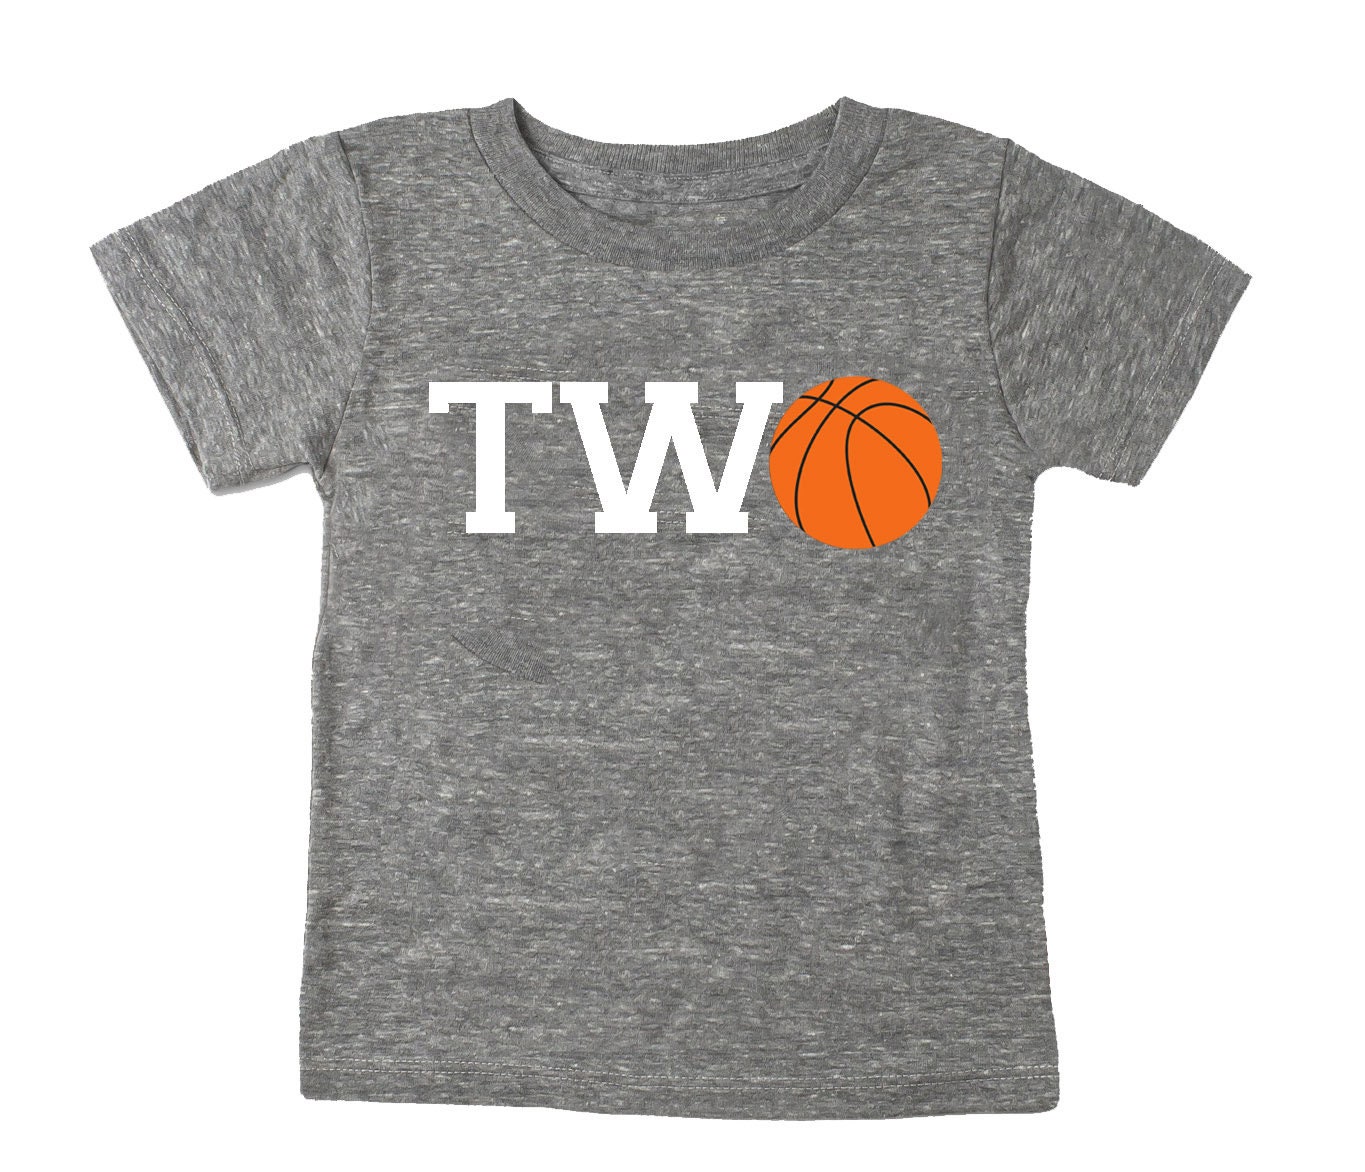 Basketball "Two' Tri Blend Toddler Birthday T-Shirt - Boy & Girl Tee